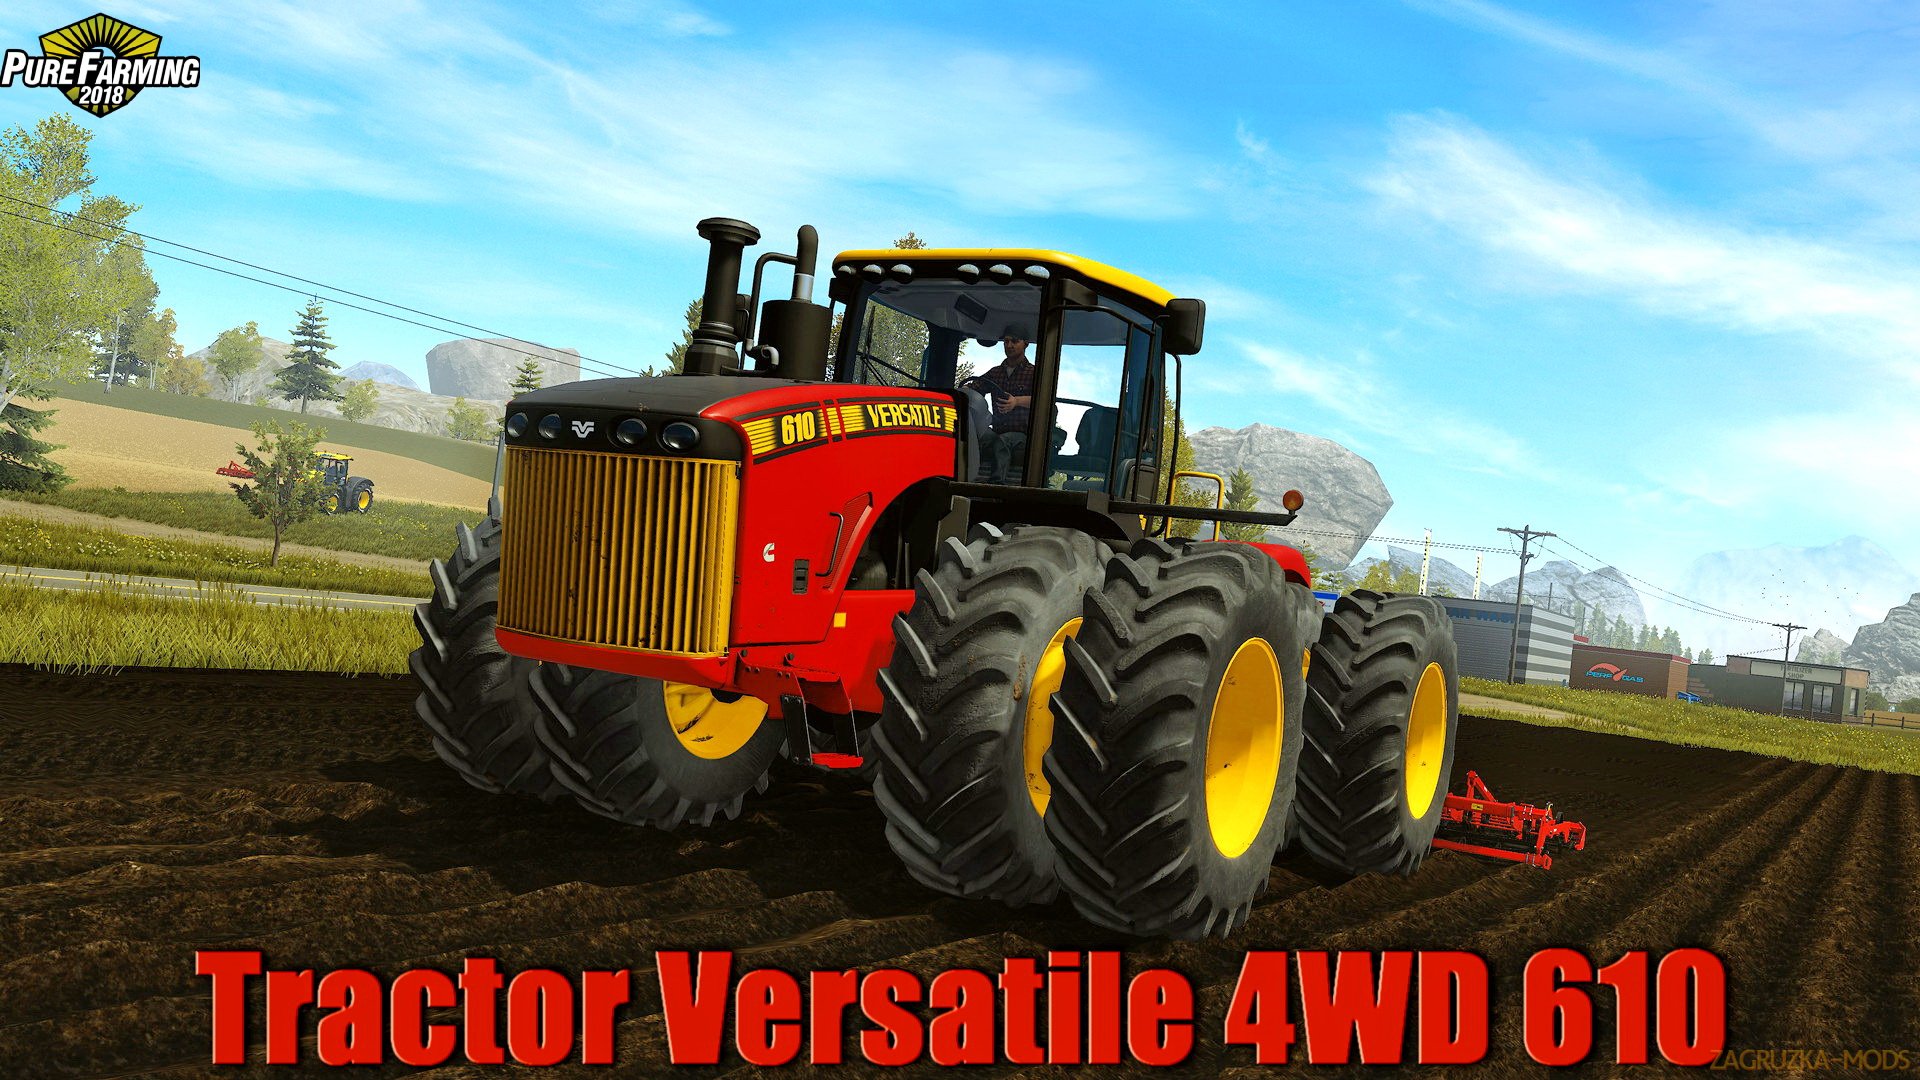 Tractor Versatile 4WD 610 v1.0 for Pure Farming 2018